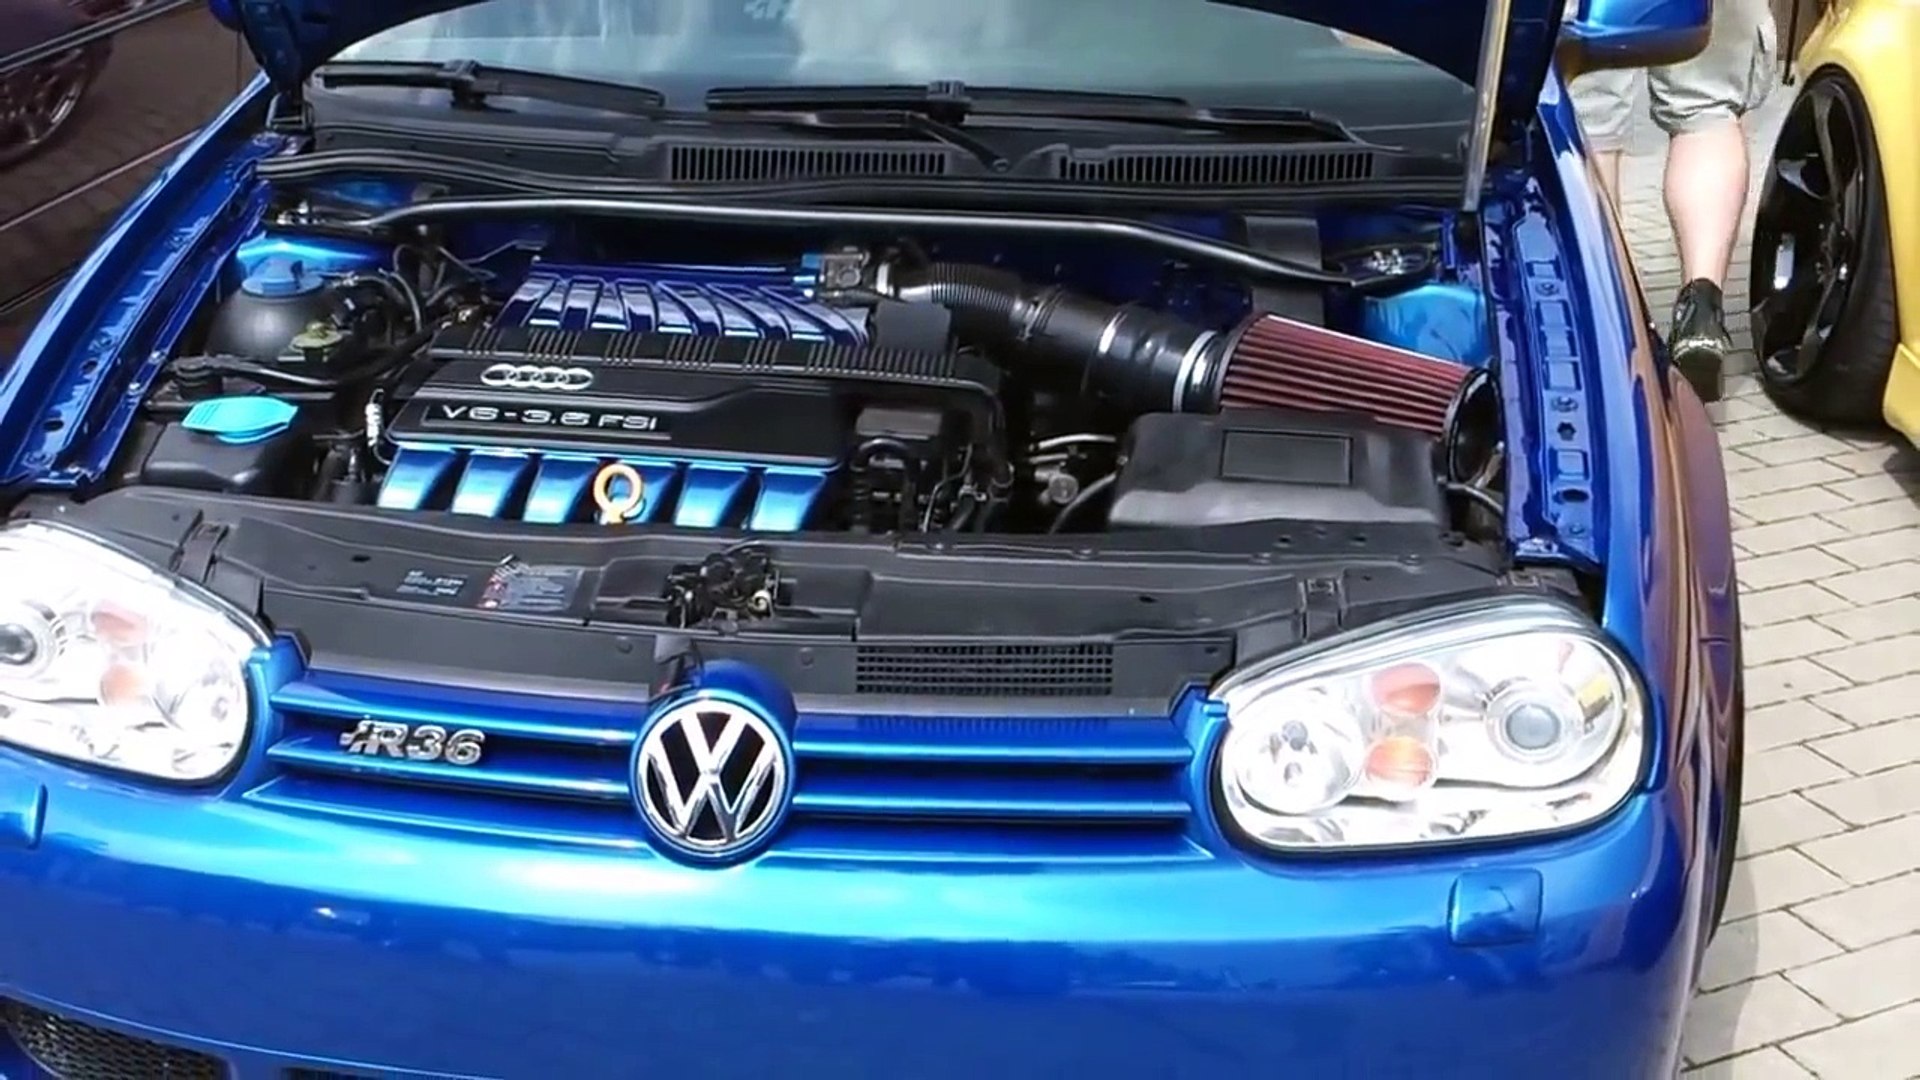 VW Golf 4 R36 Engine Sound - video Dailymotion